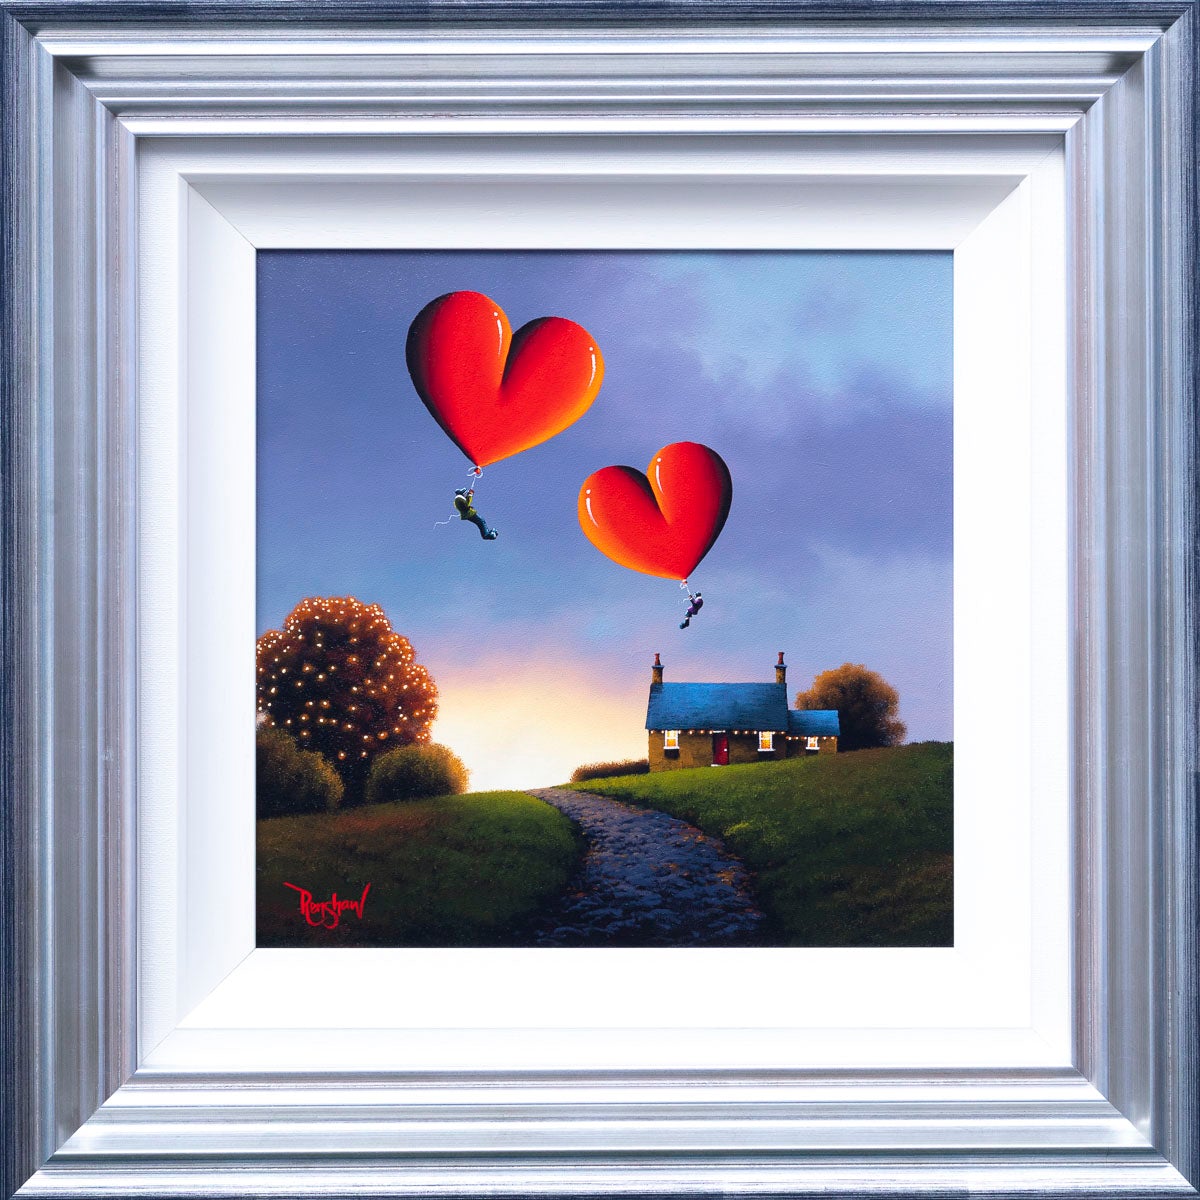 Bringing Home Our Love - Original David Renshaw Framed